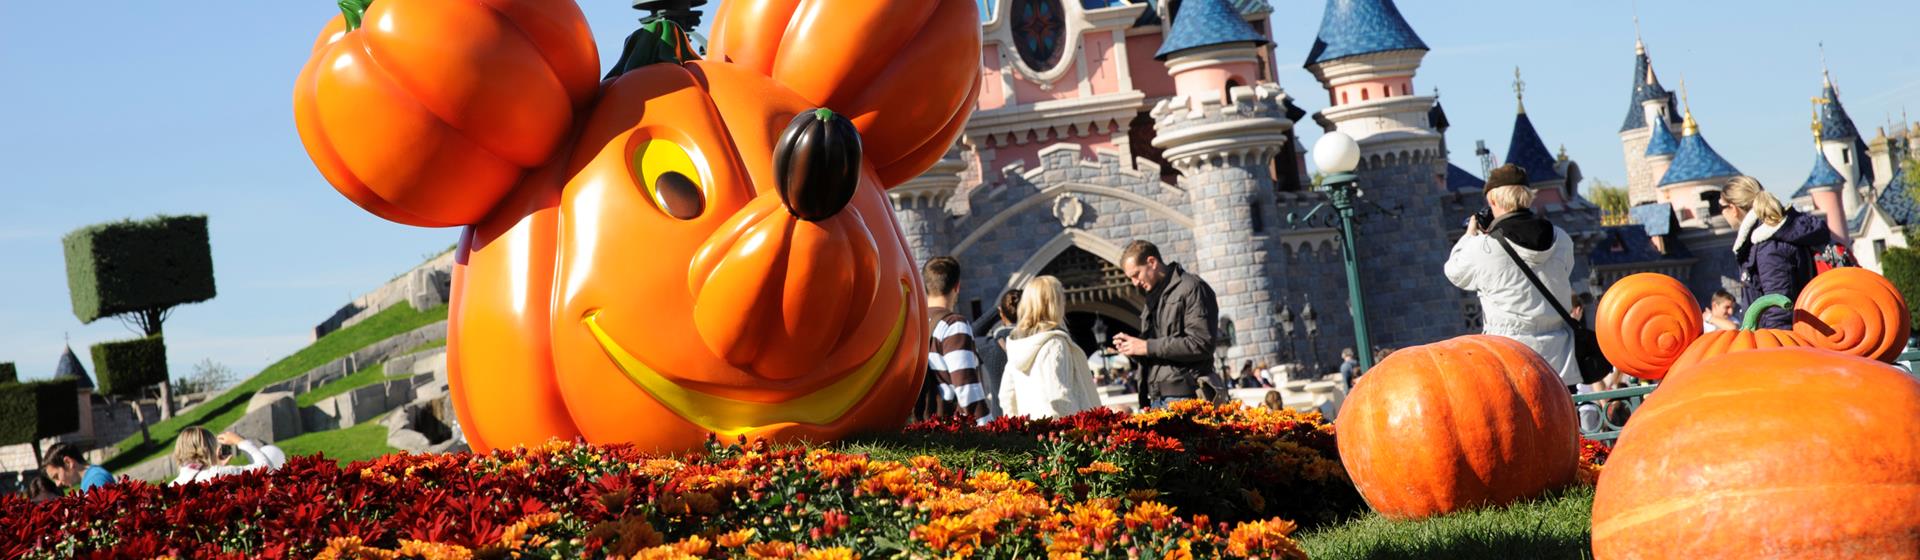 Disneyland Paris at Halloween